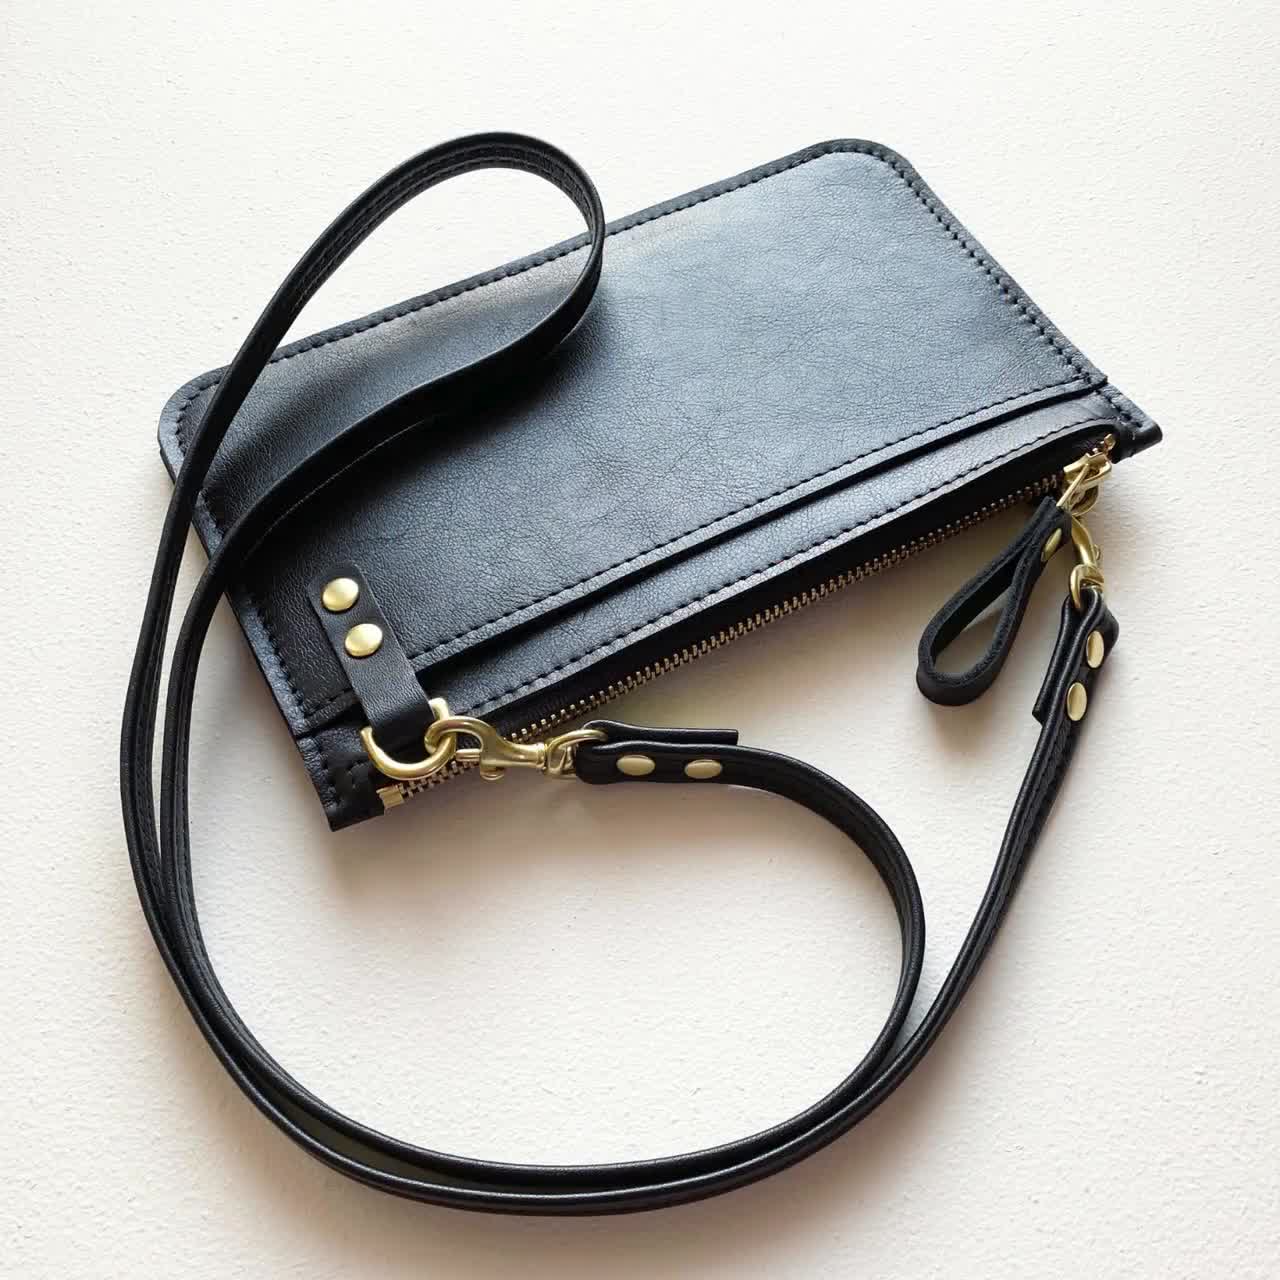 EASTNIGHTS Small Crossbody Phone Bag for Women Cell Phone Purse Wallet Kiss  Lock Cute Shoulder Bag with Credit Card Slots (black-1): Handbags:  Amazon.com